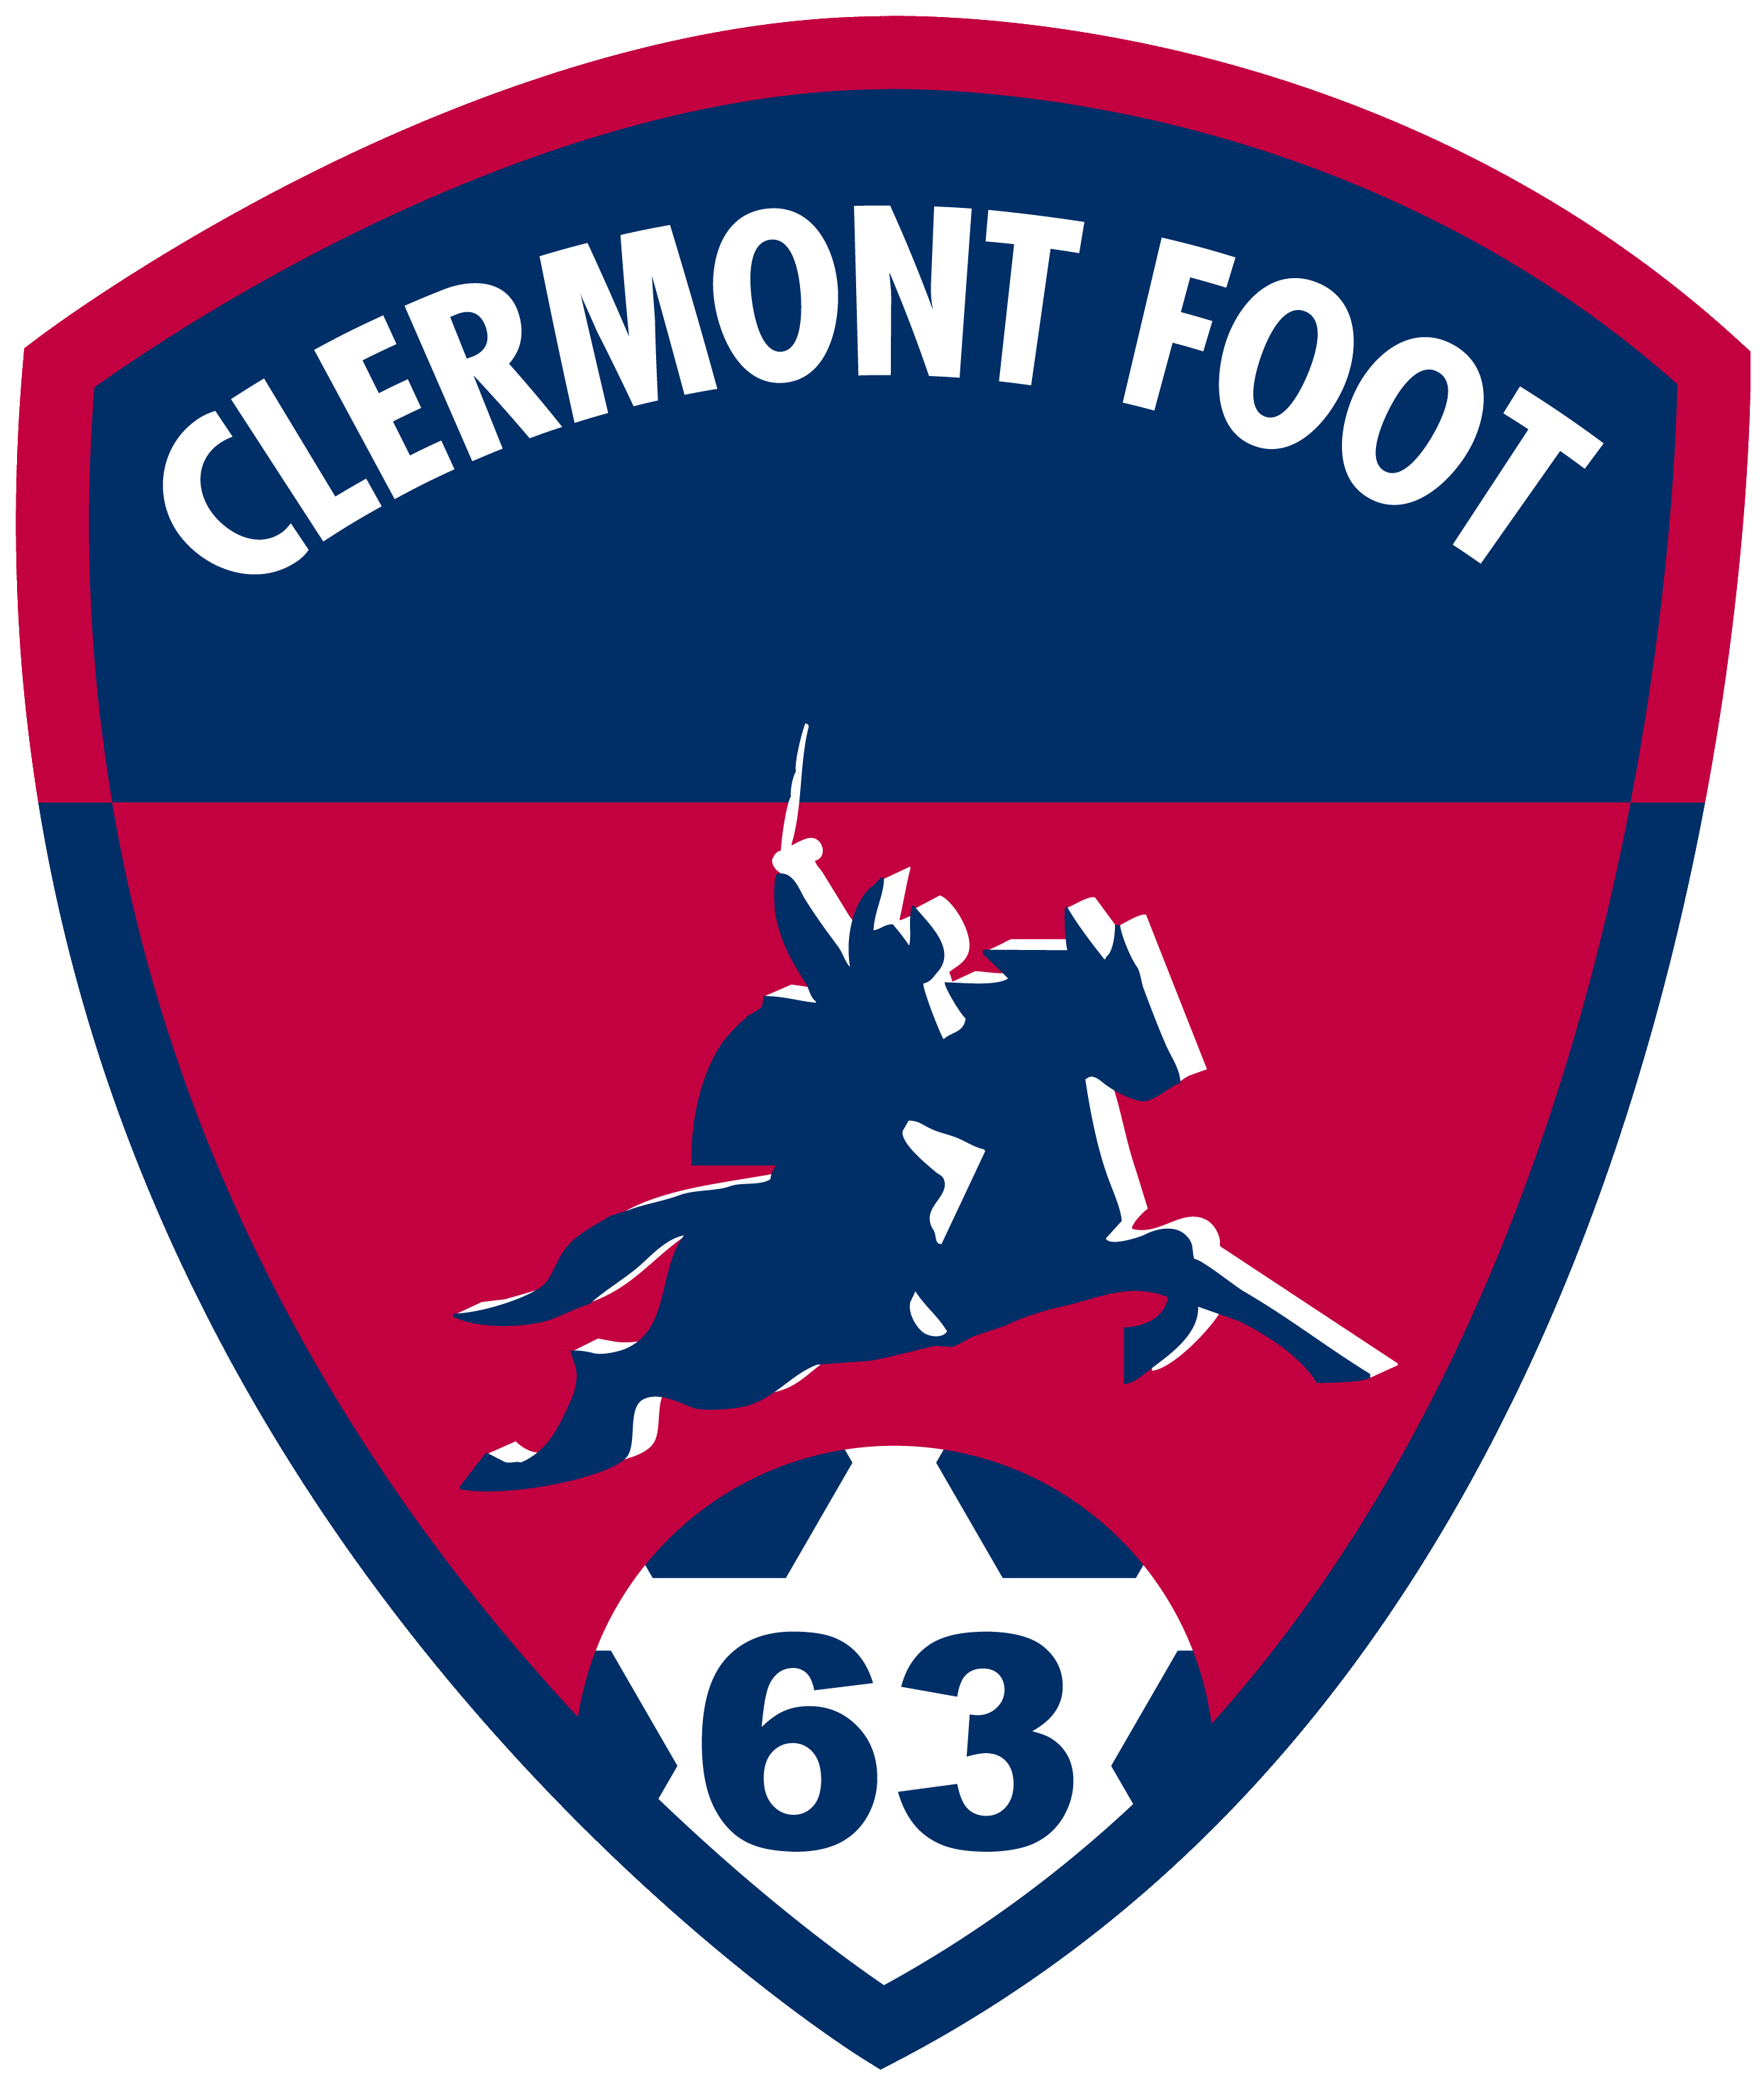 Clermont Foot 63 vs AS Monaco Prediction: Monaco won't disappoint 